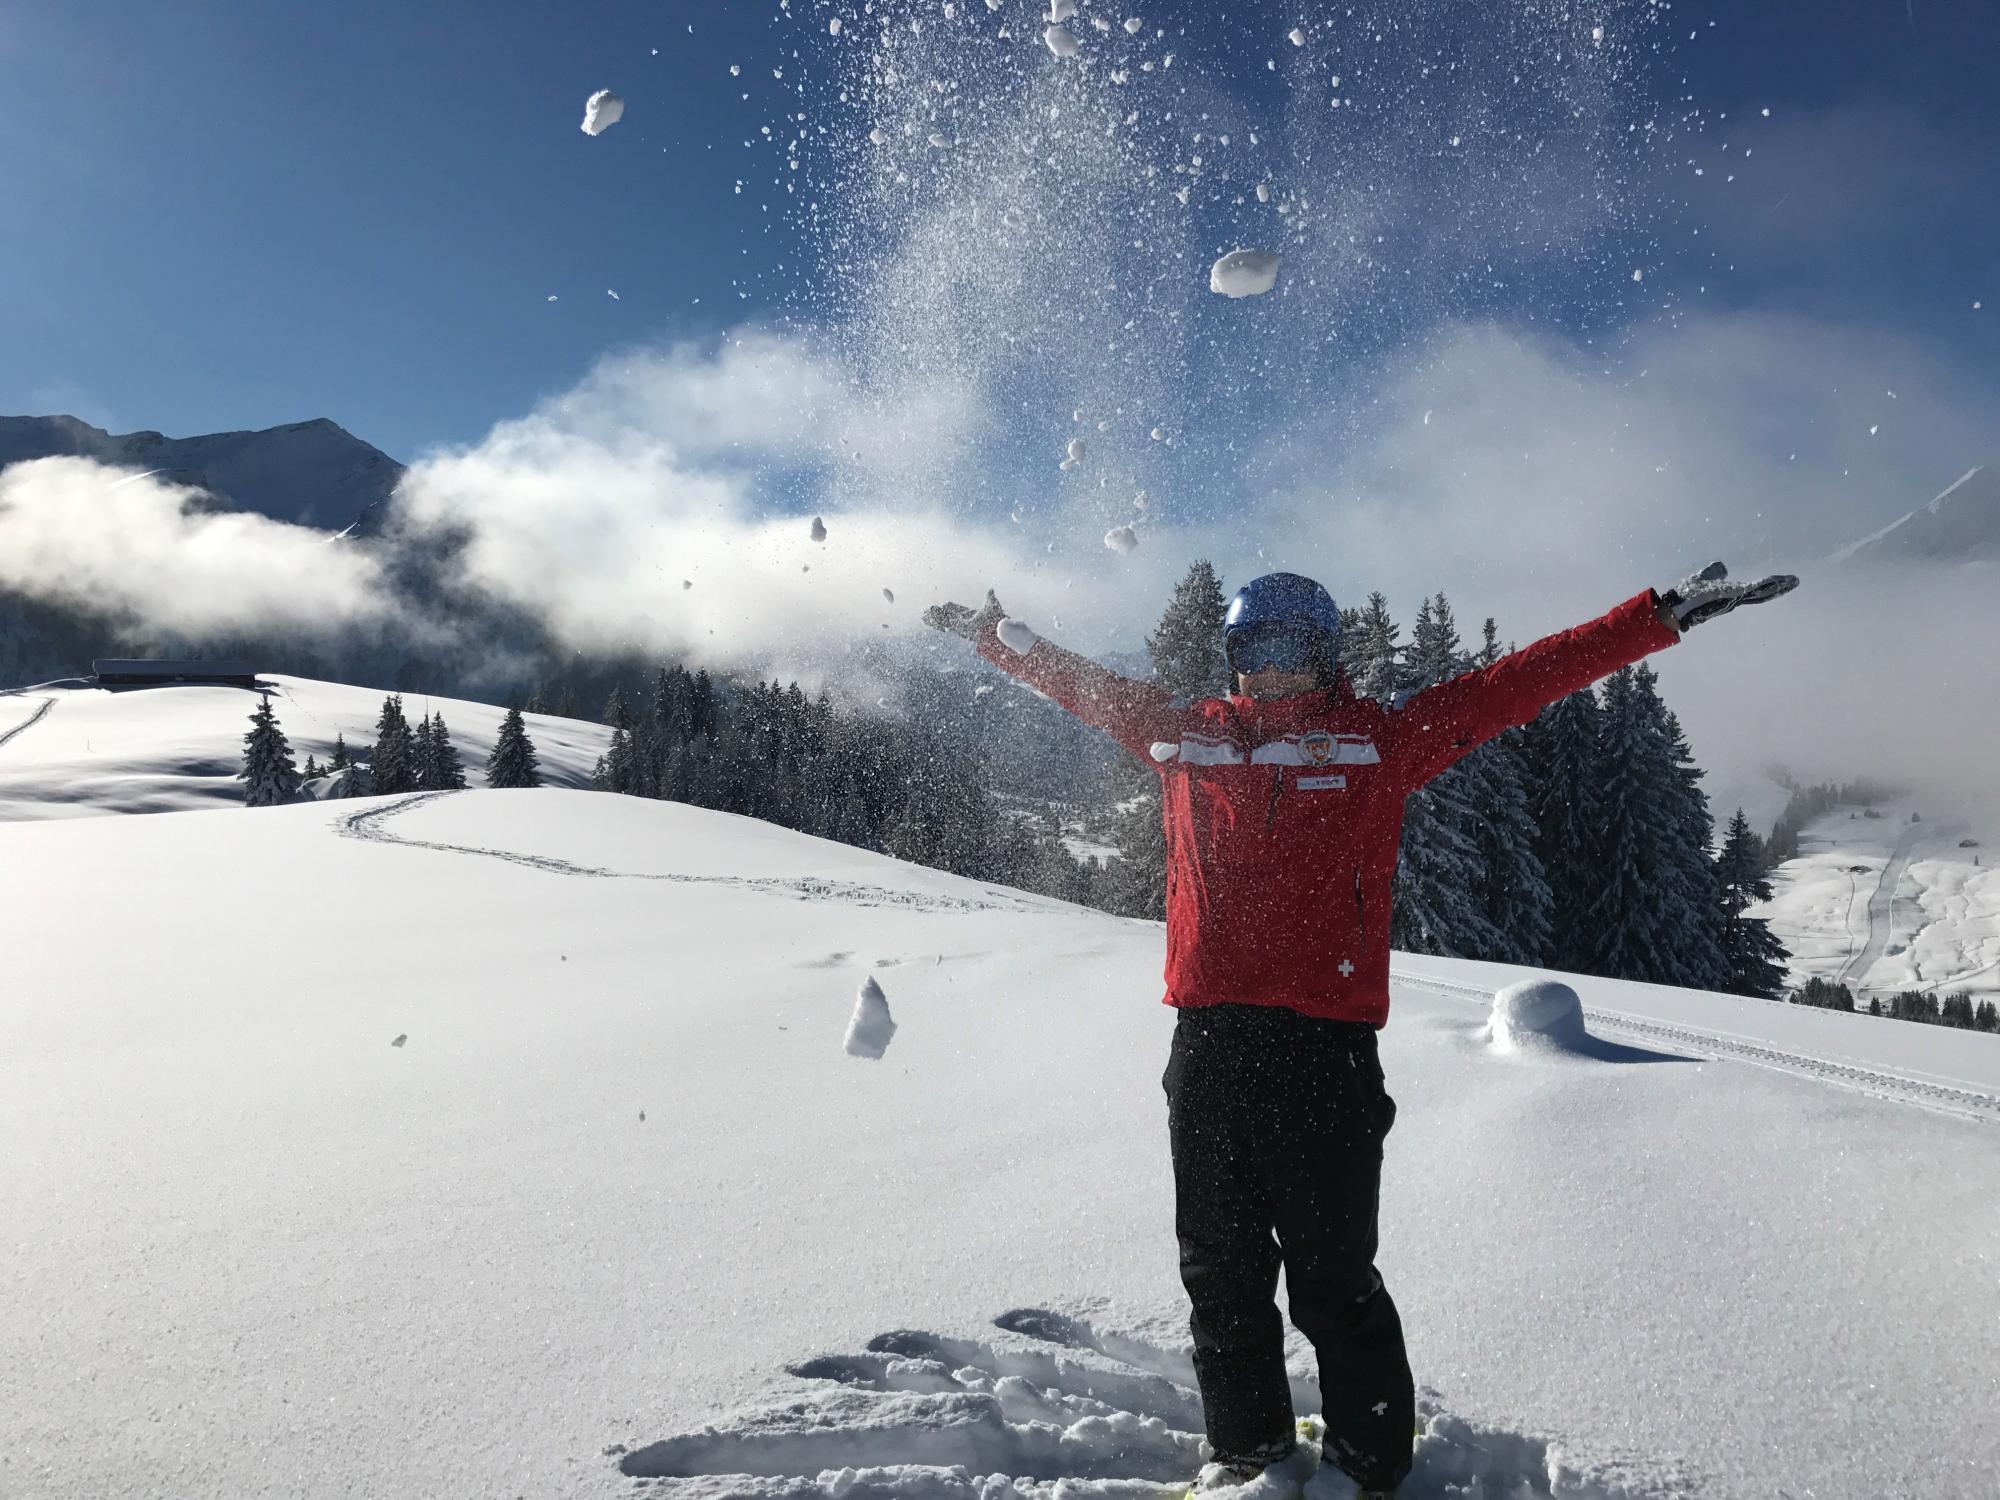 Les Mosses - Swiss Ski School instructor - winter